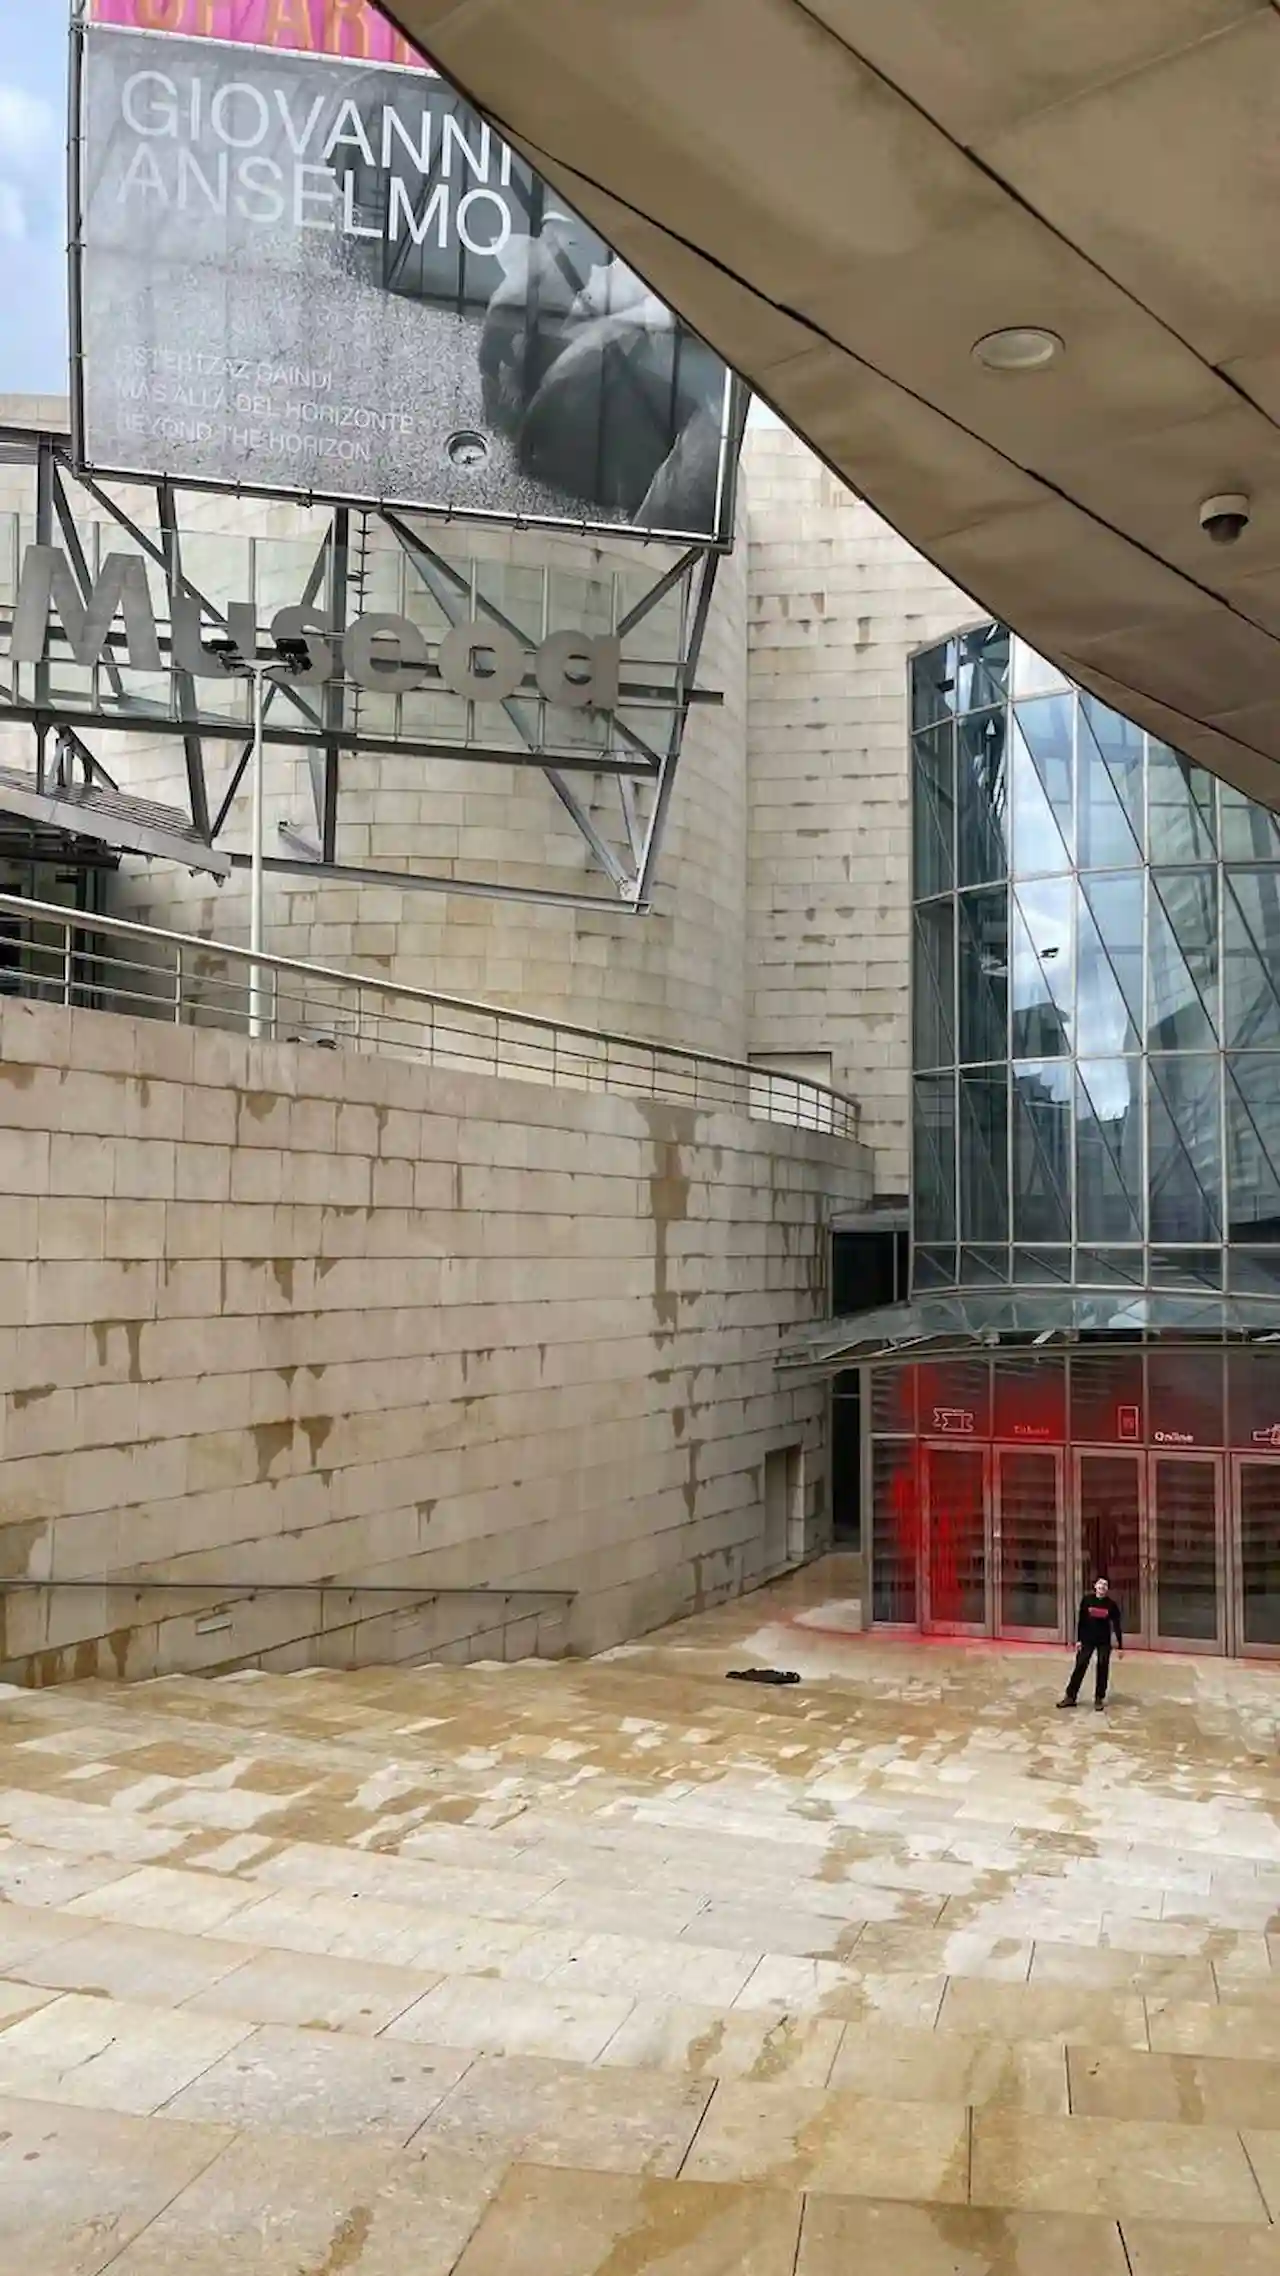 Activismo climático en la puerta del Guggenheim Bilbao / Foto: Futuro Vegetal